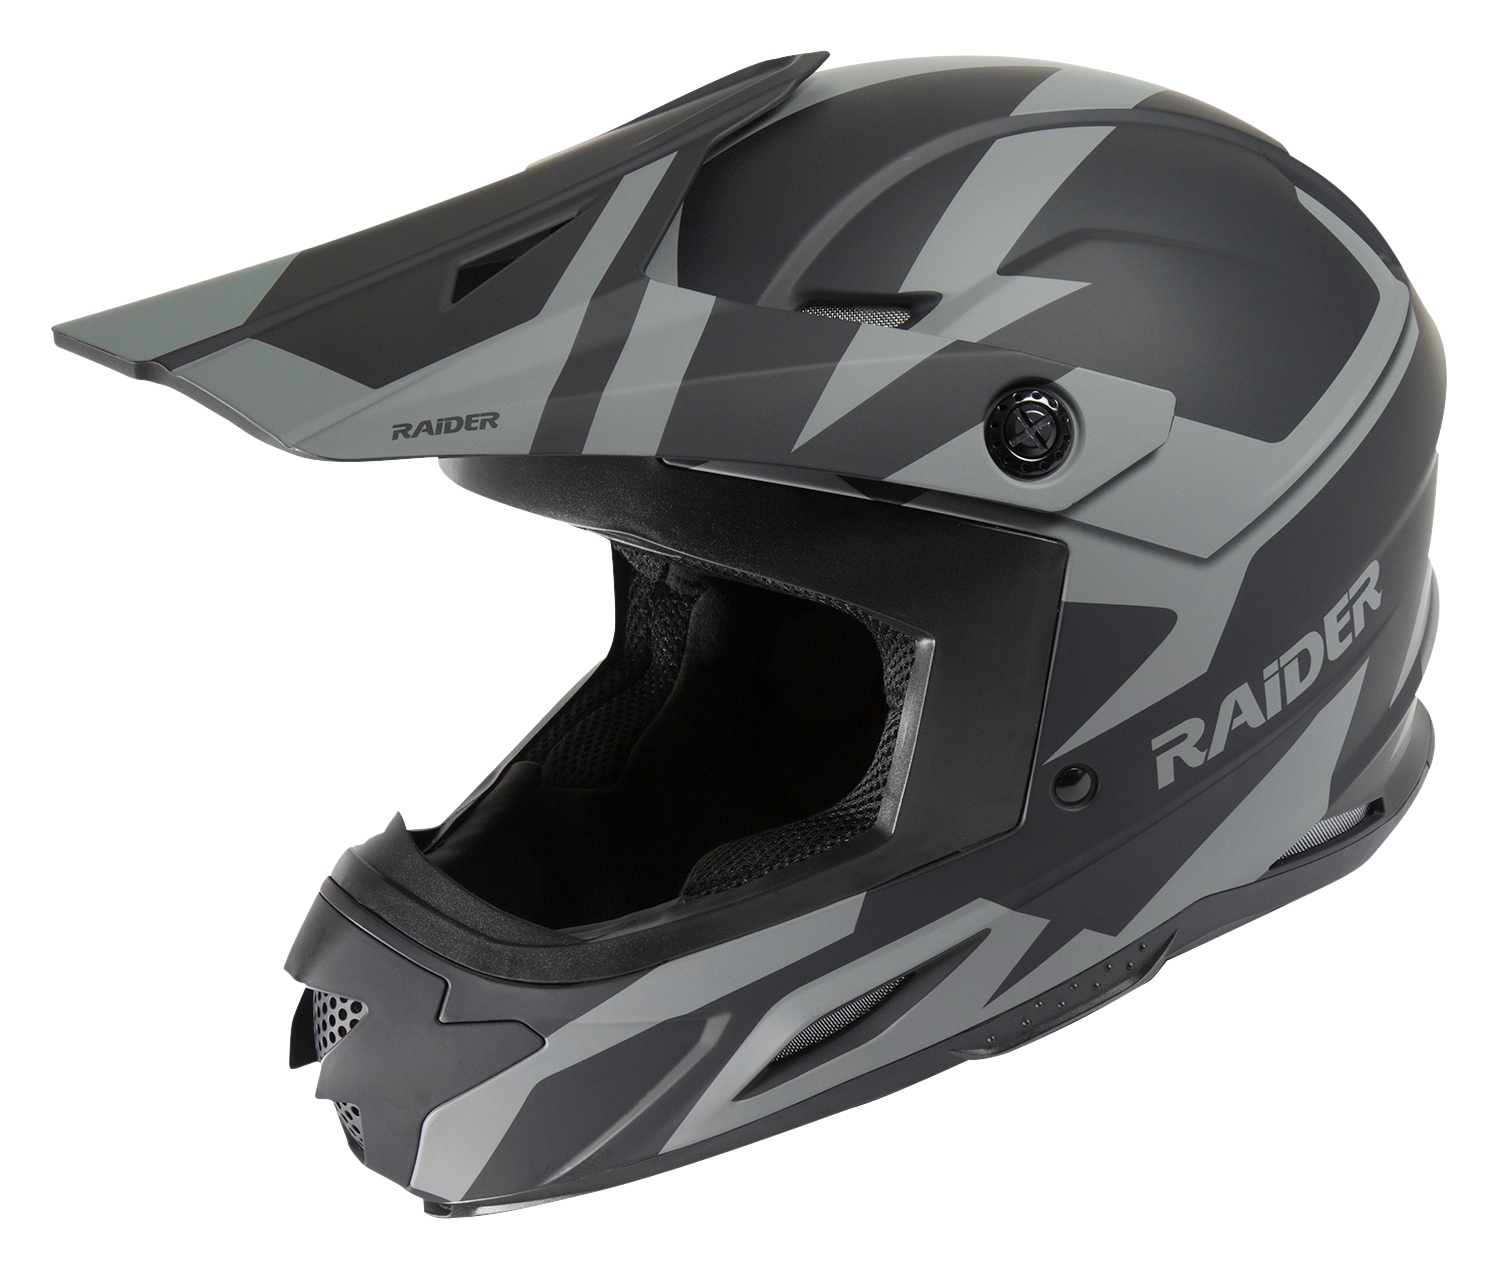 Raider Z7 MX Helmet for Adults